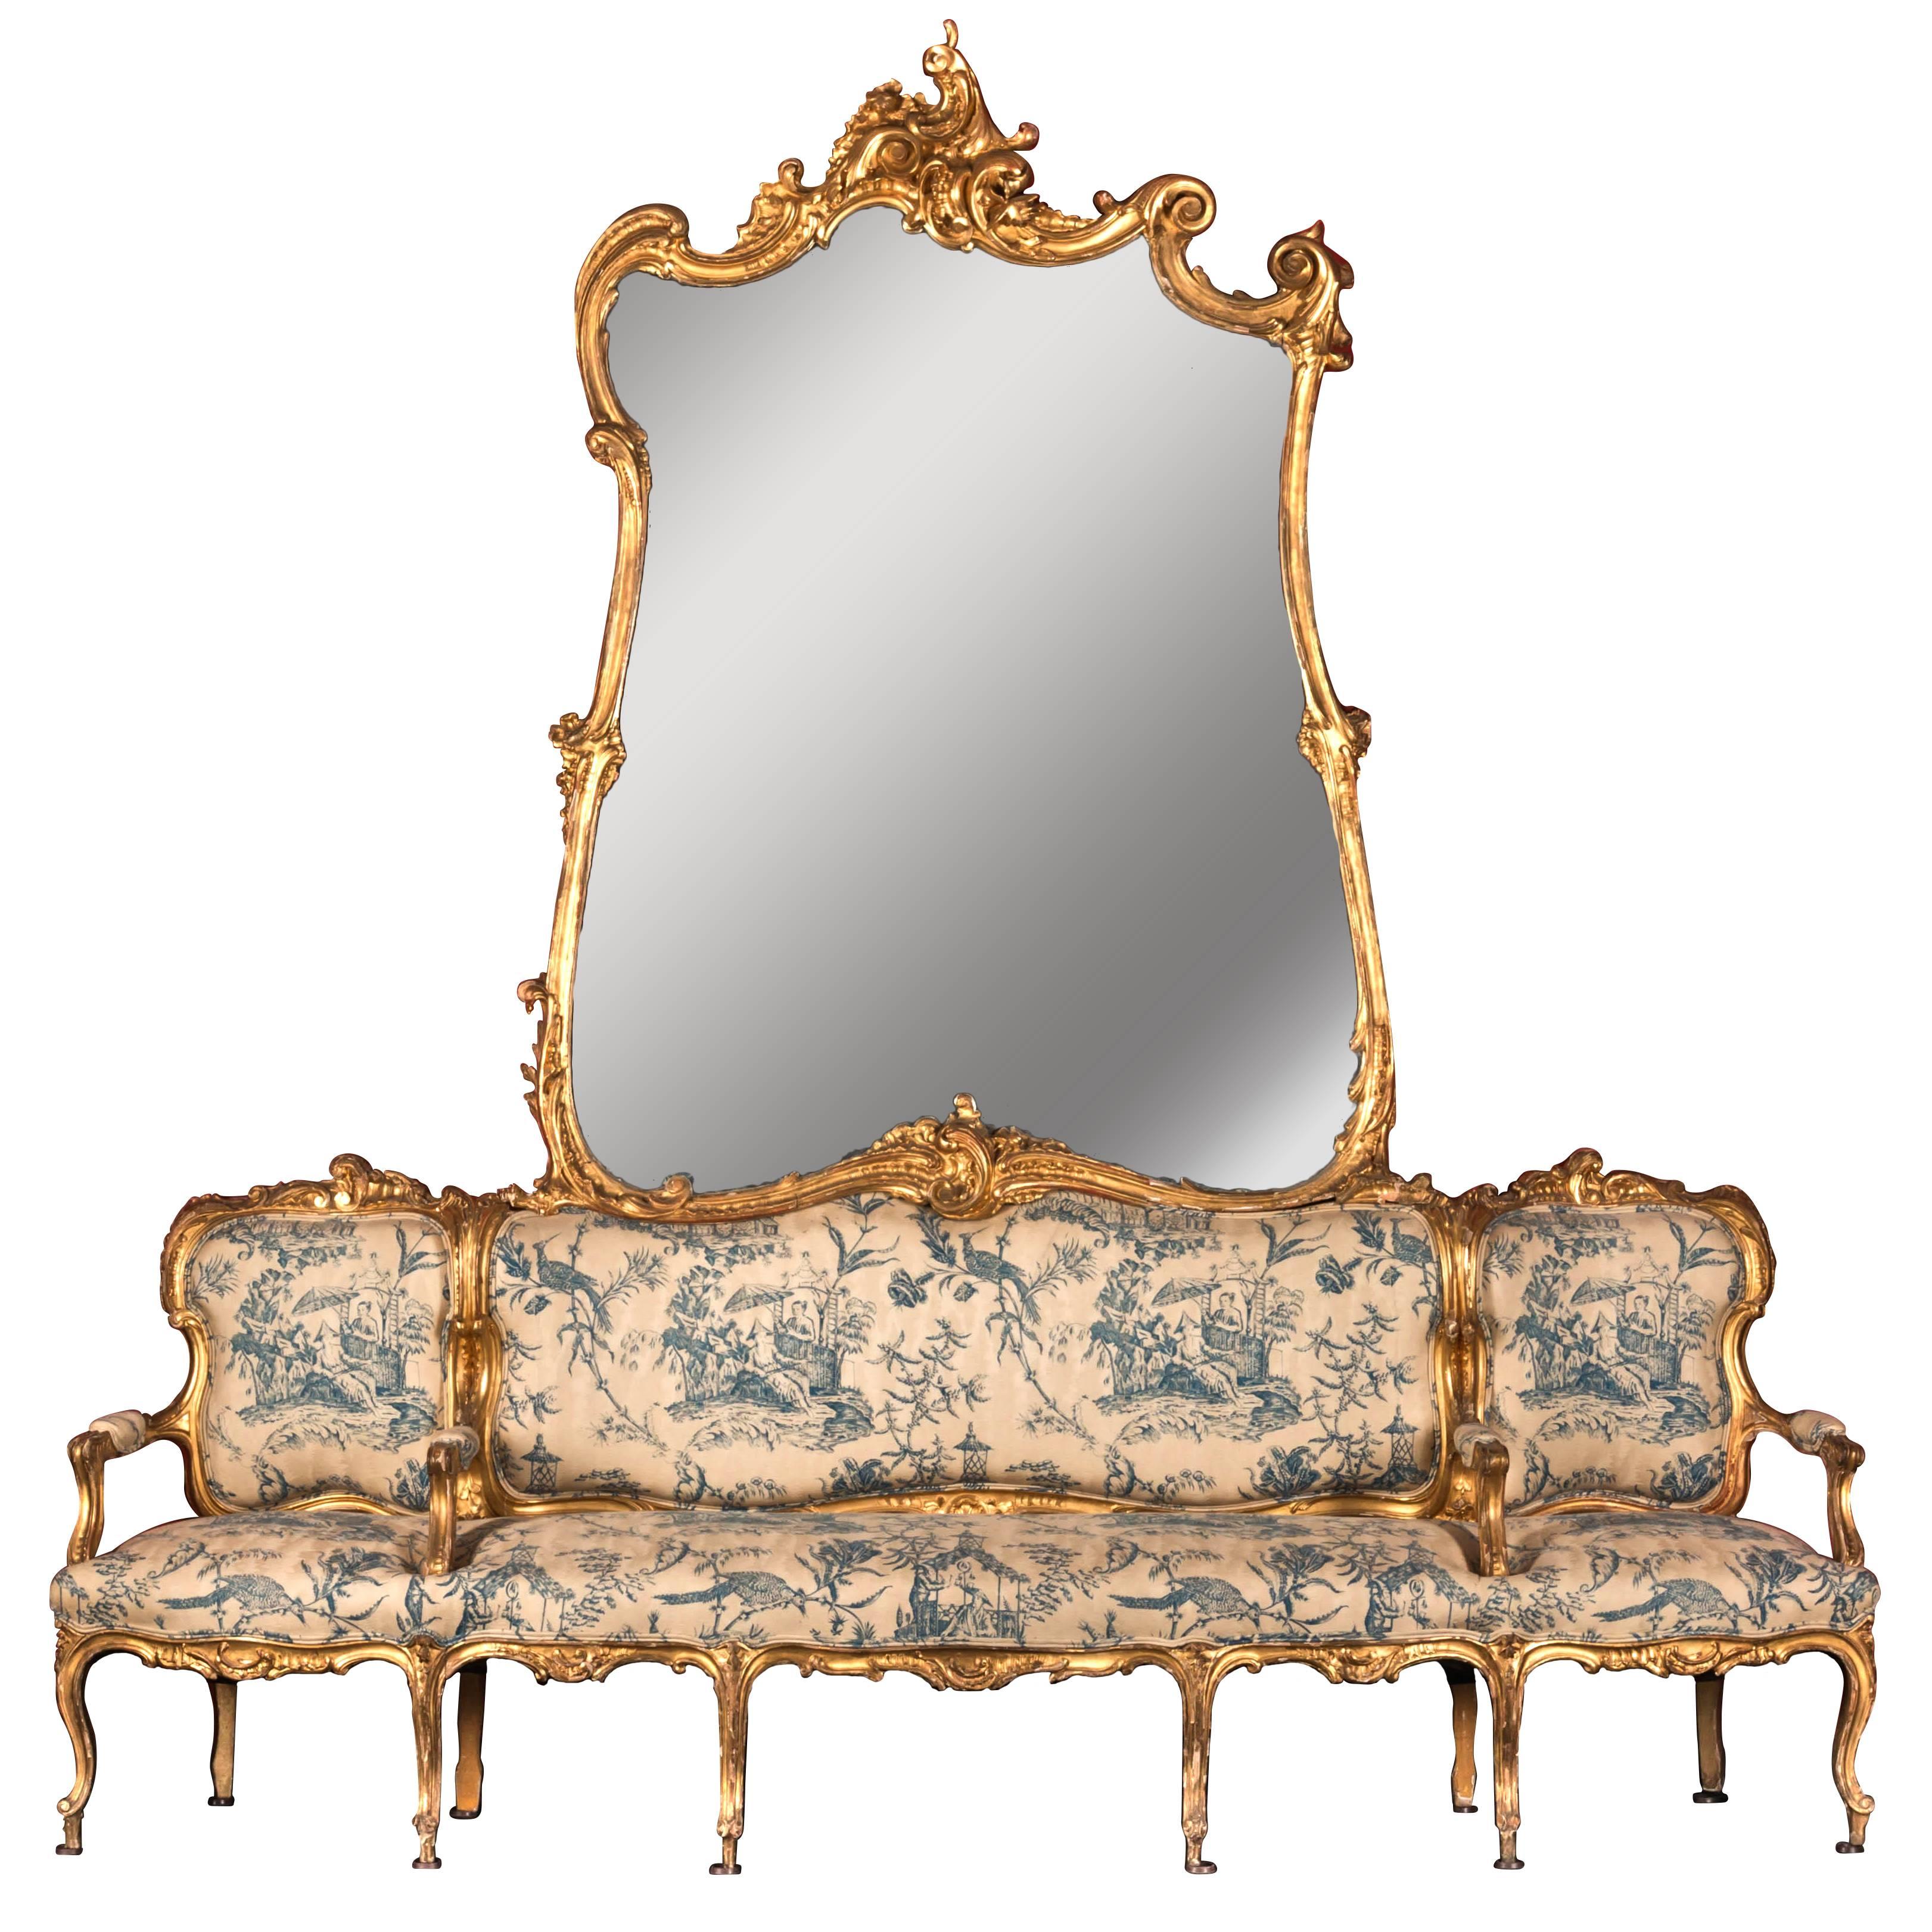 19th Century German Sofa and Mirror or "Canape De L'amitie" in Louis XV Style